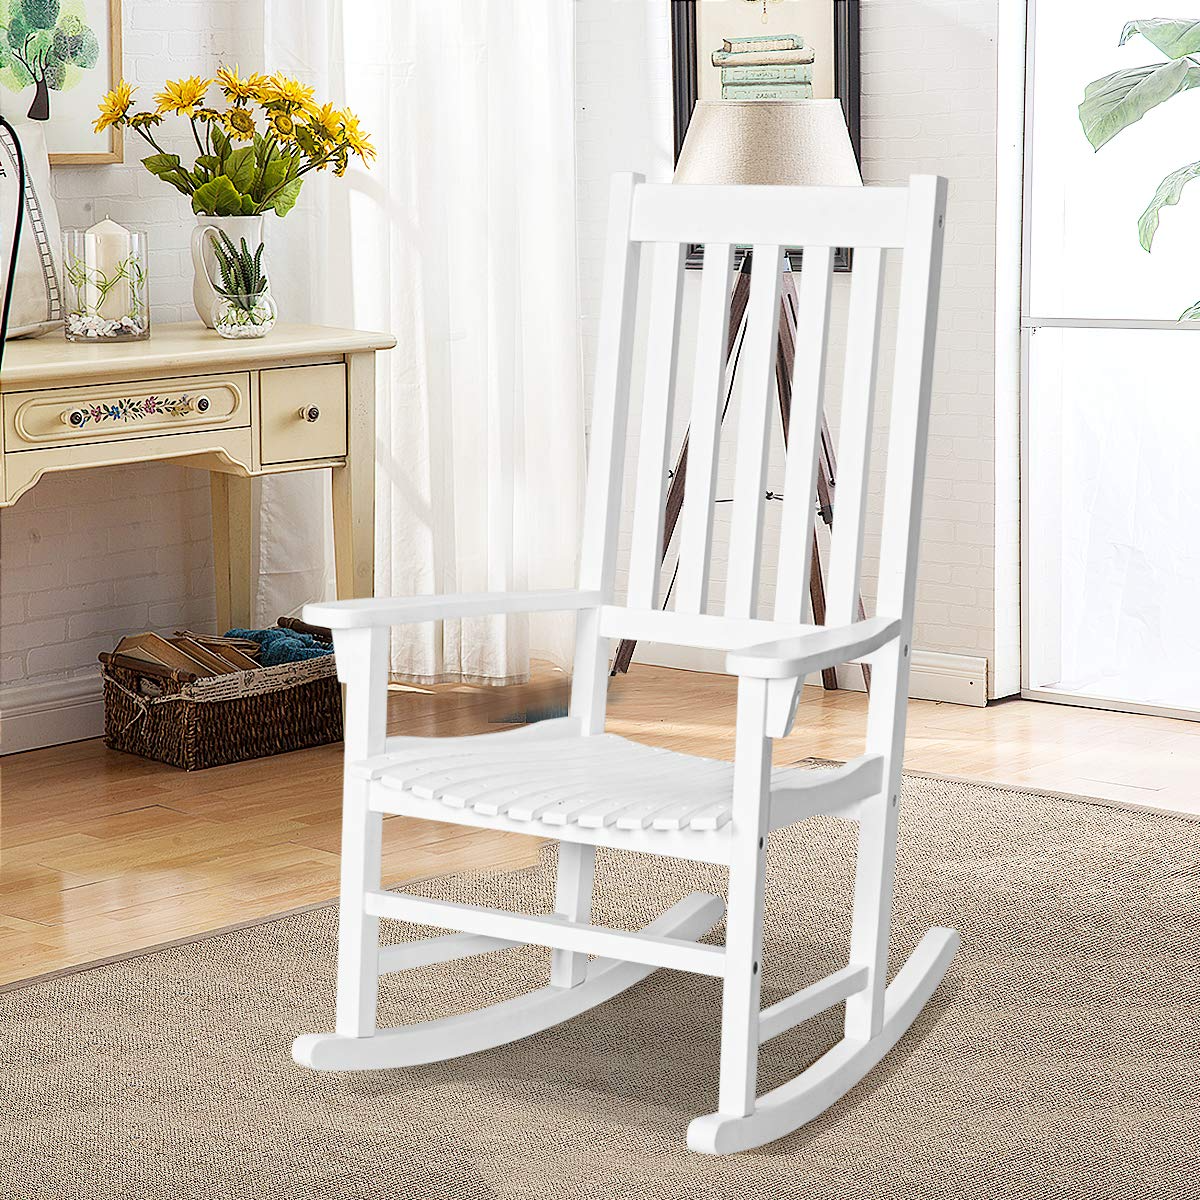 Giantex Rocking Chair Acacia Wood Frame Outdoor& Indoor